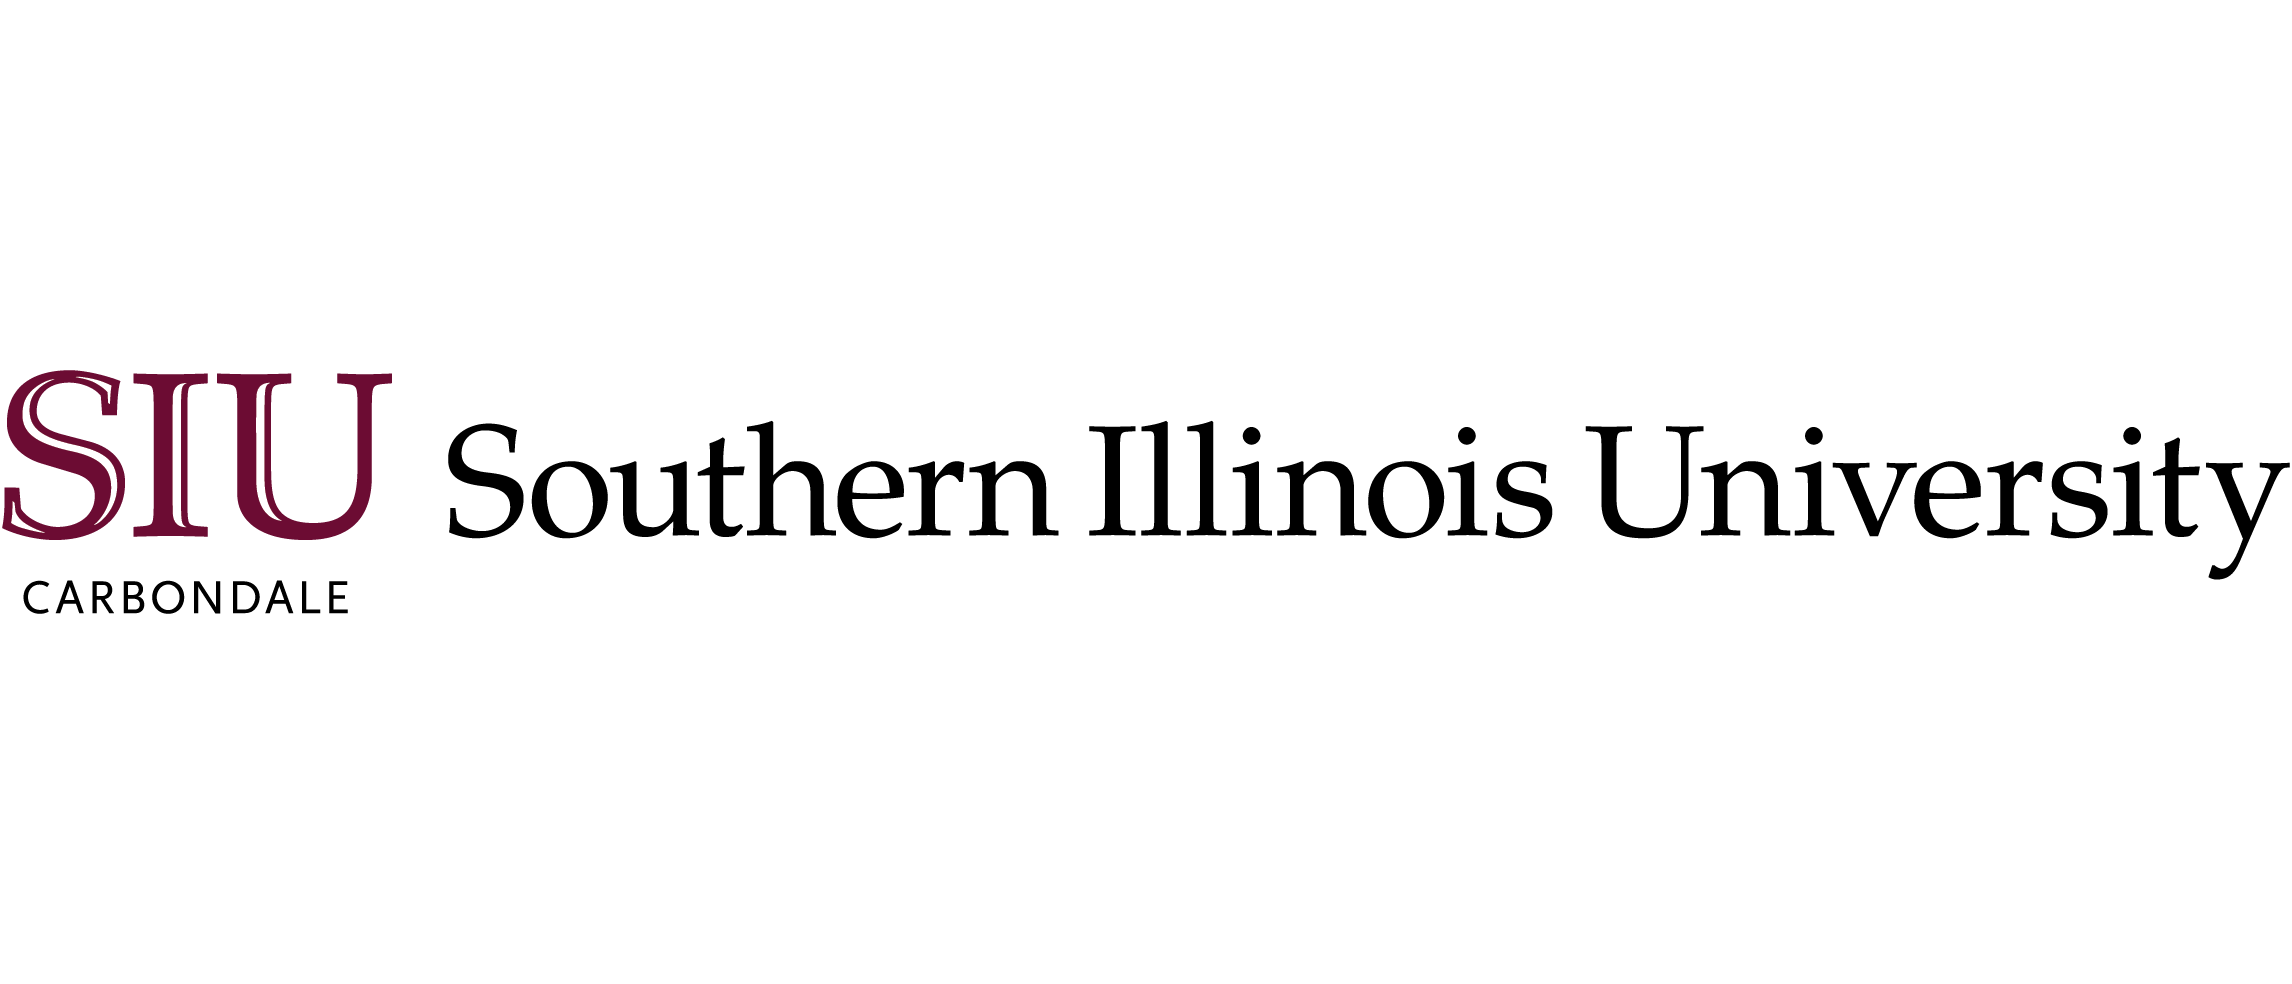 Southern Illinois University - Carbondale logo